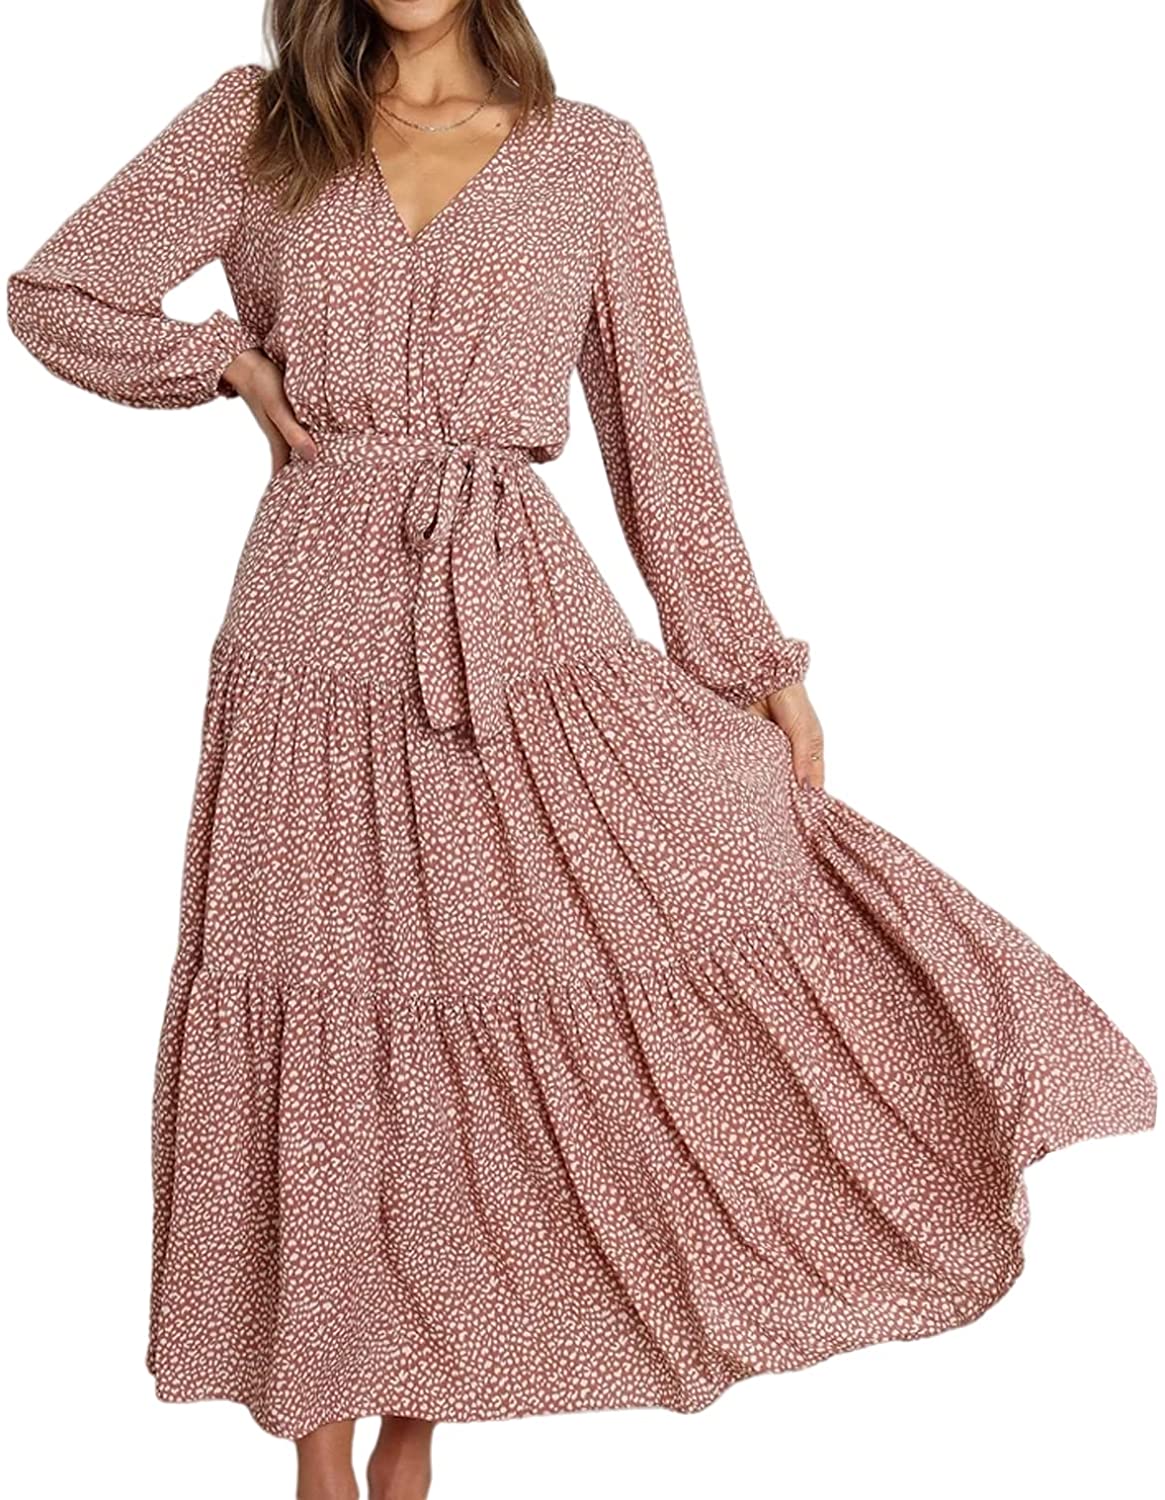 R.Vivimos Women's Fall Cotton Long Sleeves Irregular Polka Dot V Neck  Casual Flo | eBay